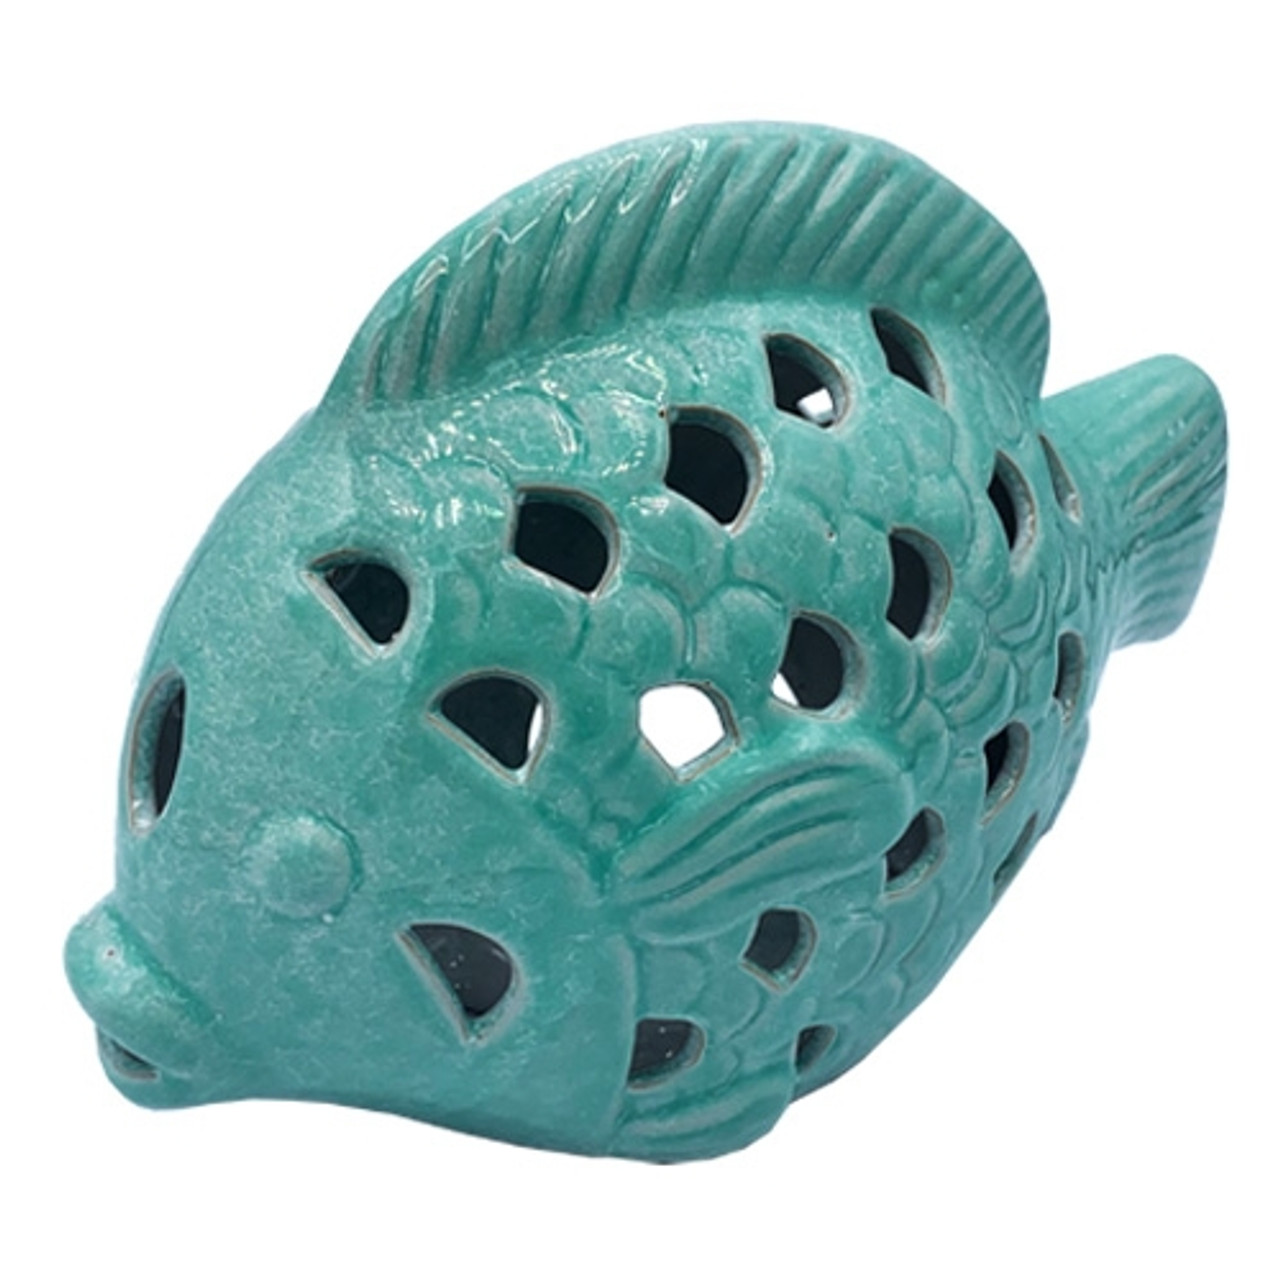 Ceramic Fish Tea Light Candle Holder - Nautical Bathroom Decor